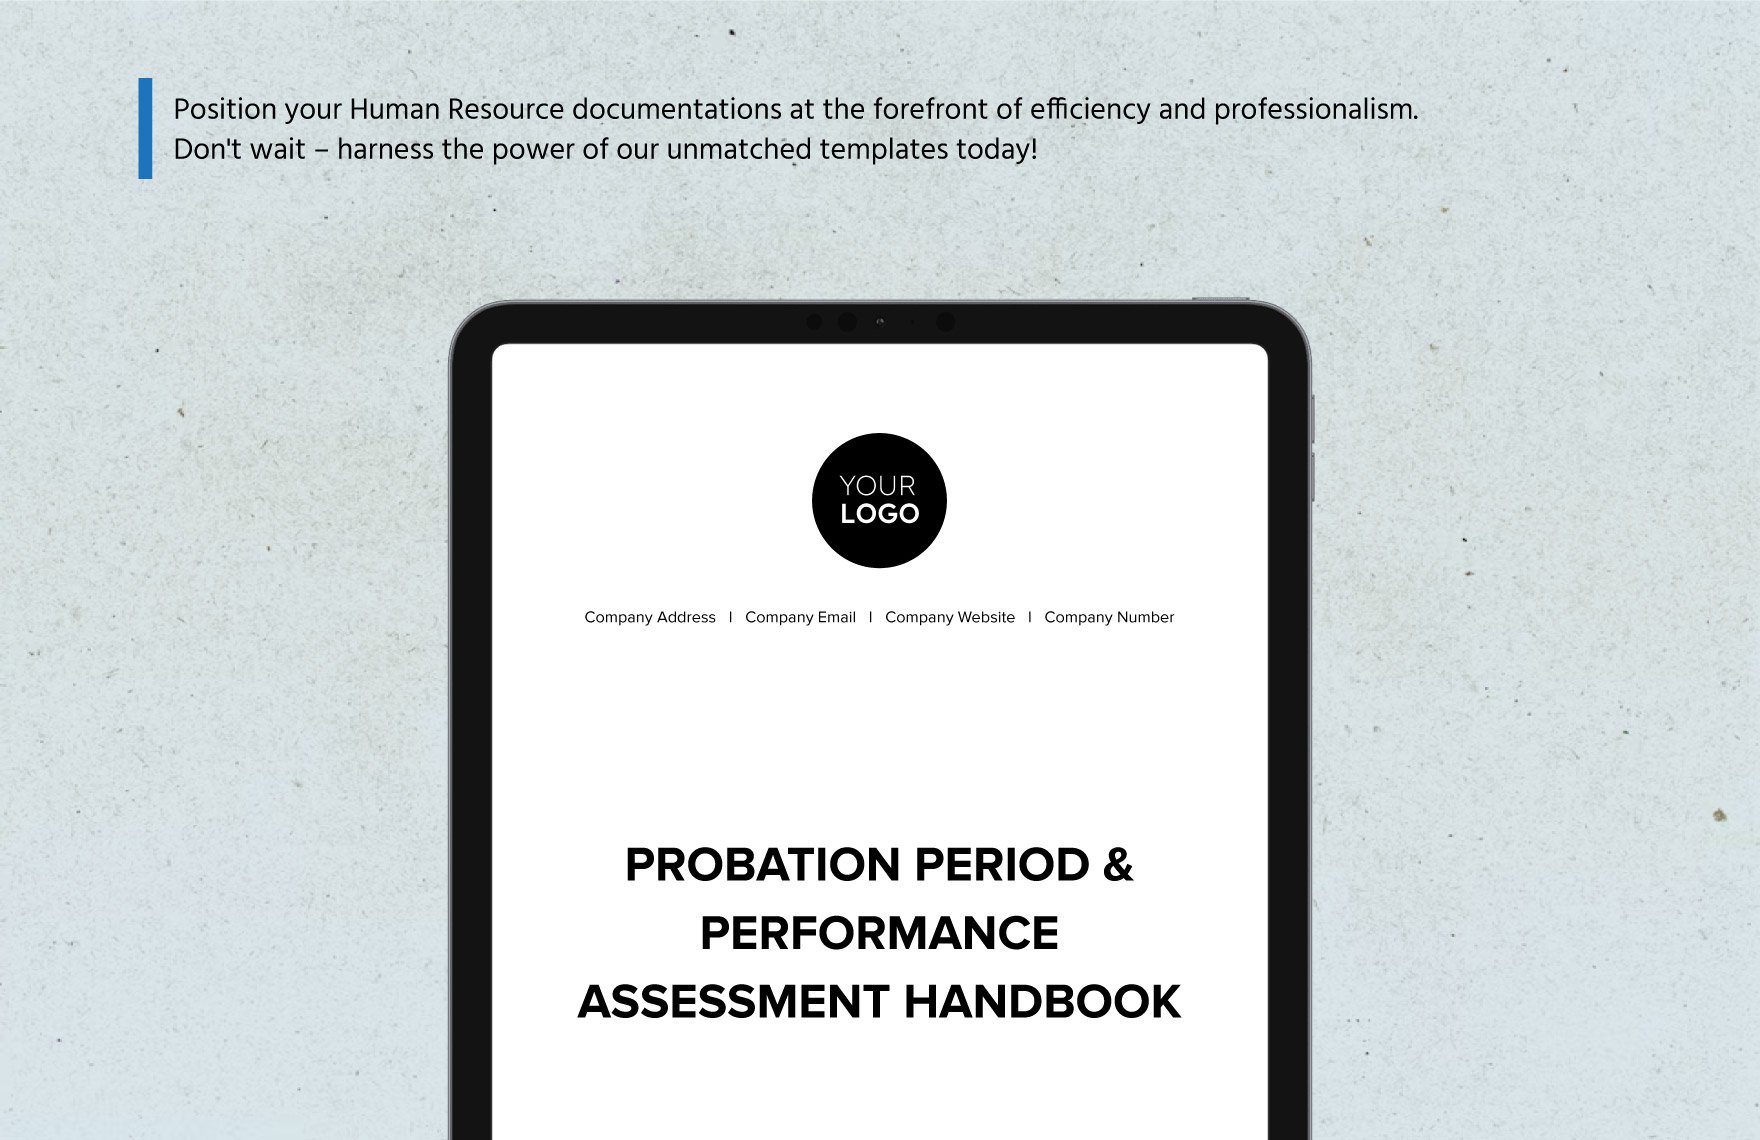 Probation Period & Performance Assessment Handbook HR Template